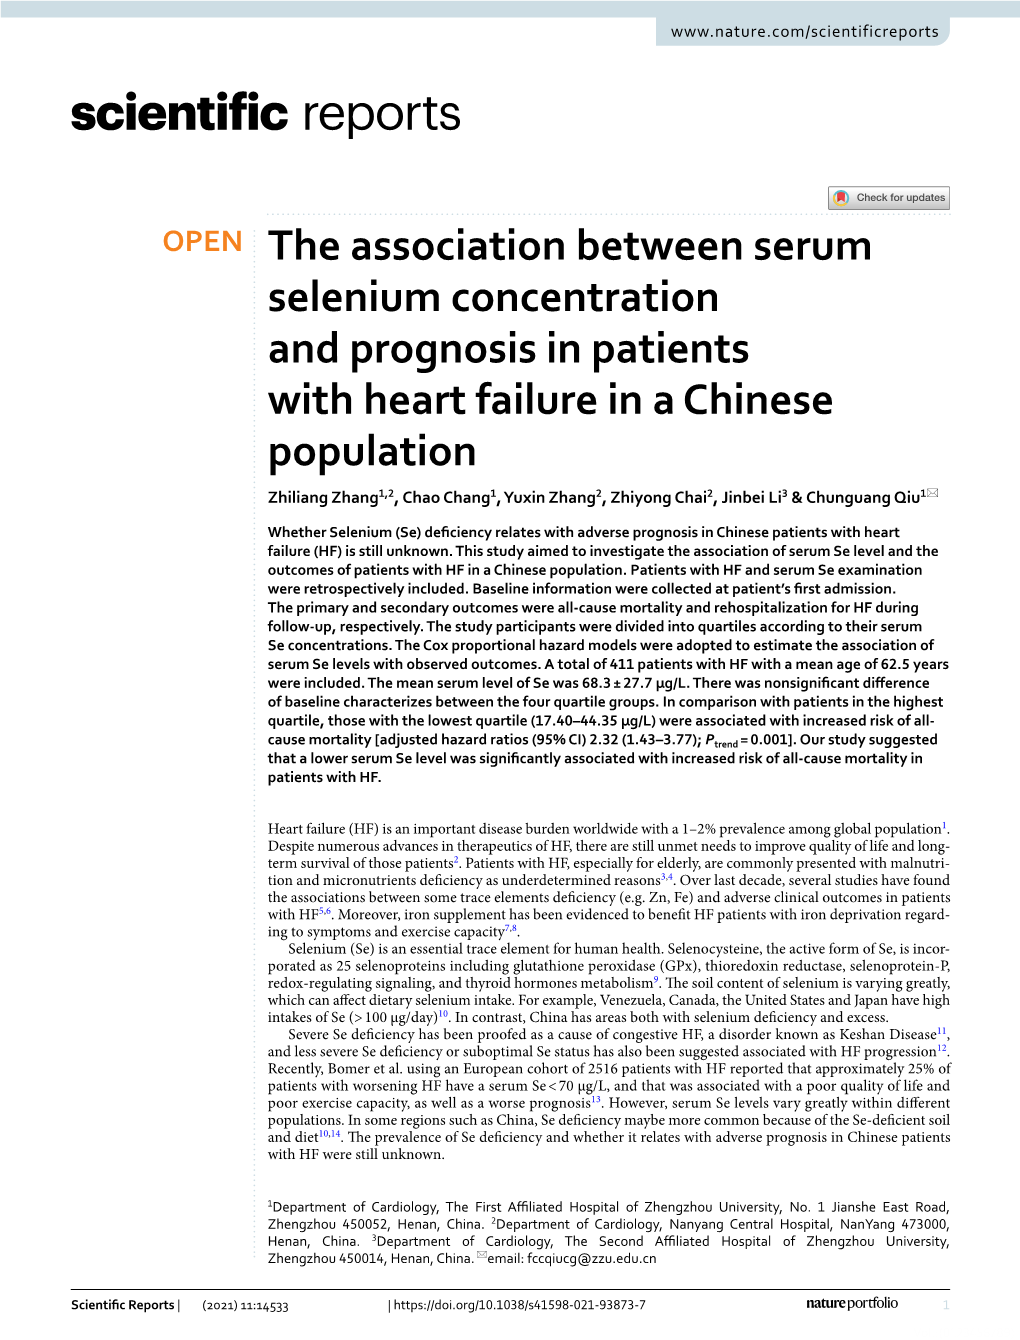 The Association Between Serum Selenium Concentration